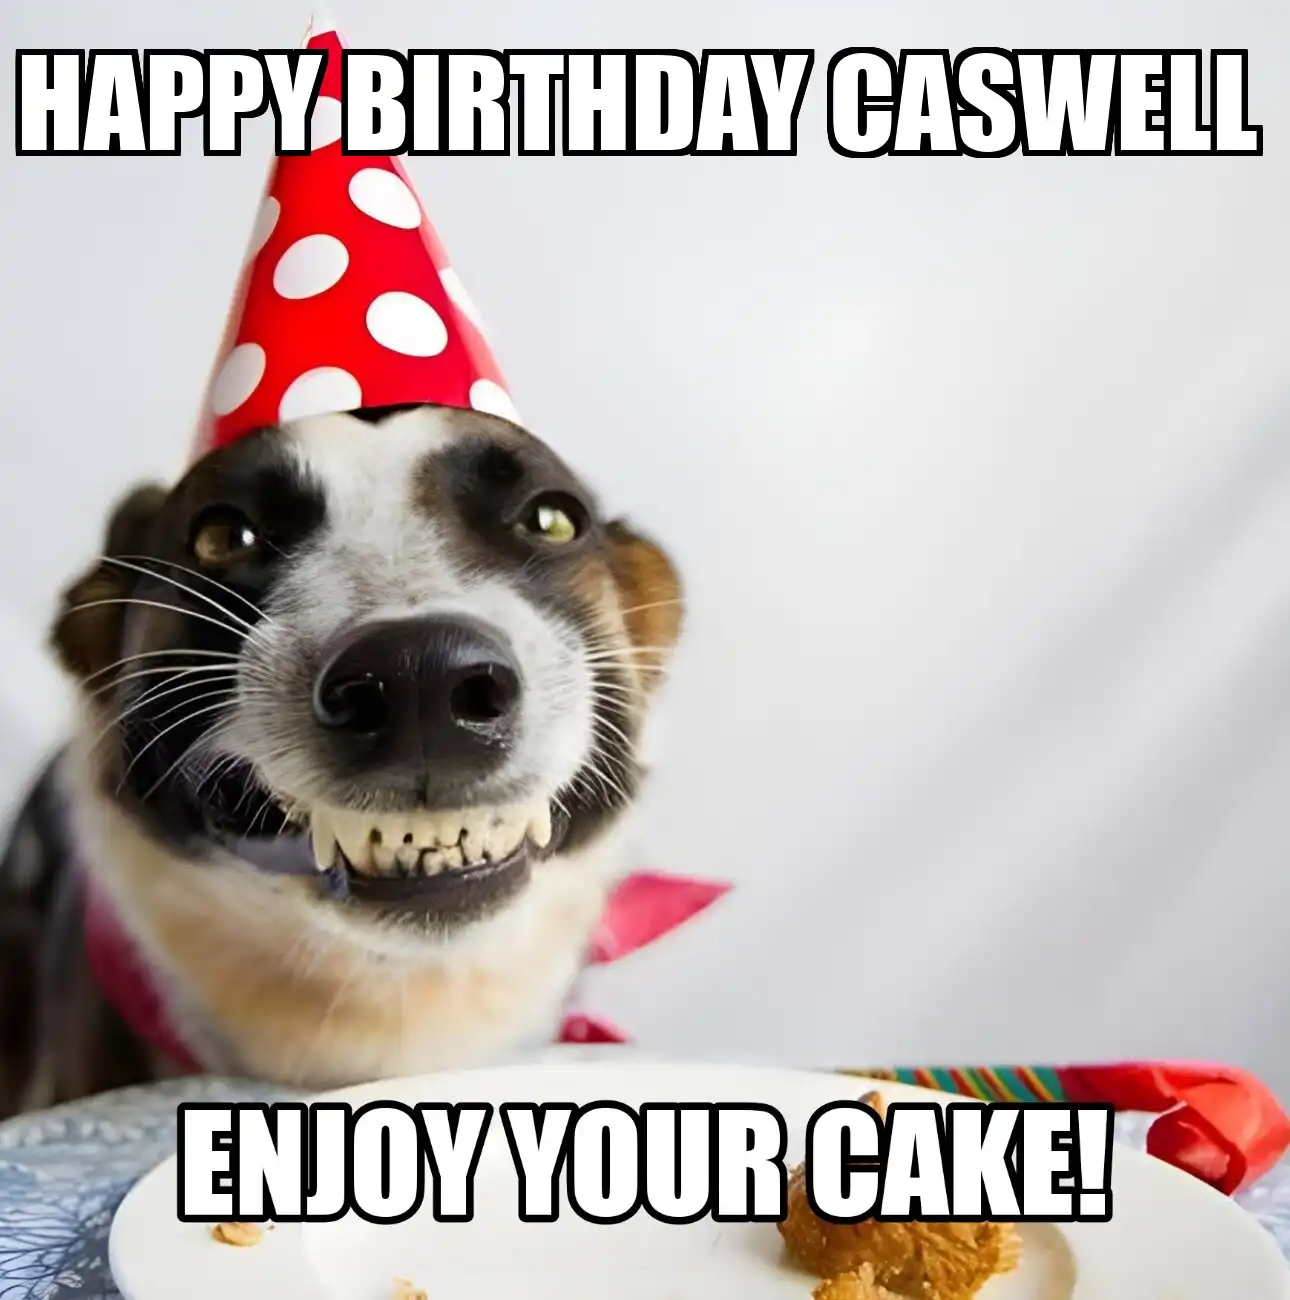 Happy Birthday Caswell Enjoy Your Cake Dog Meme